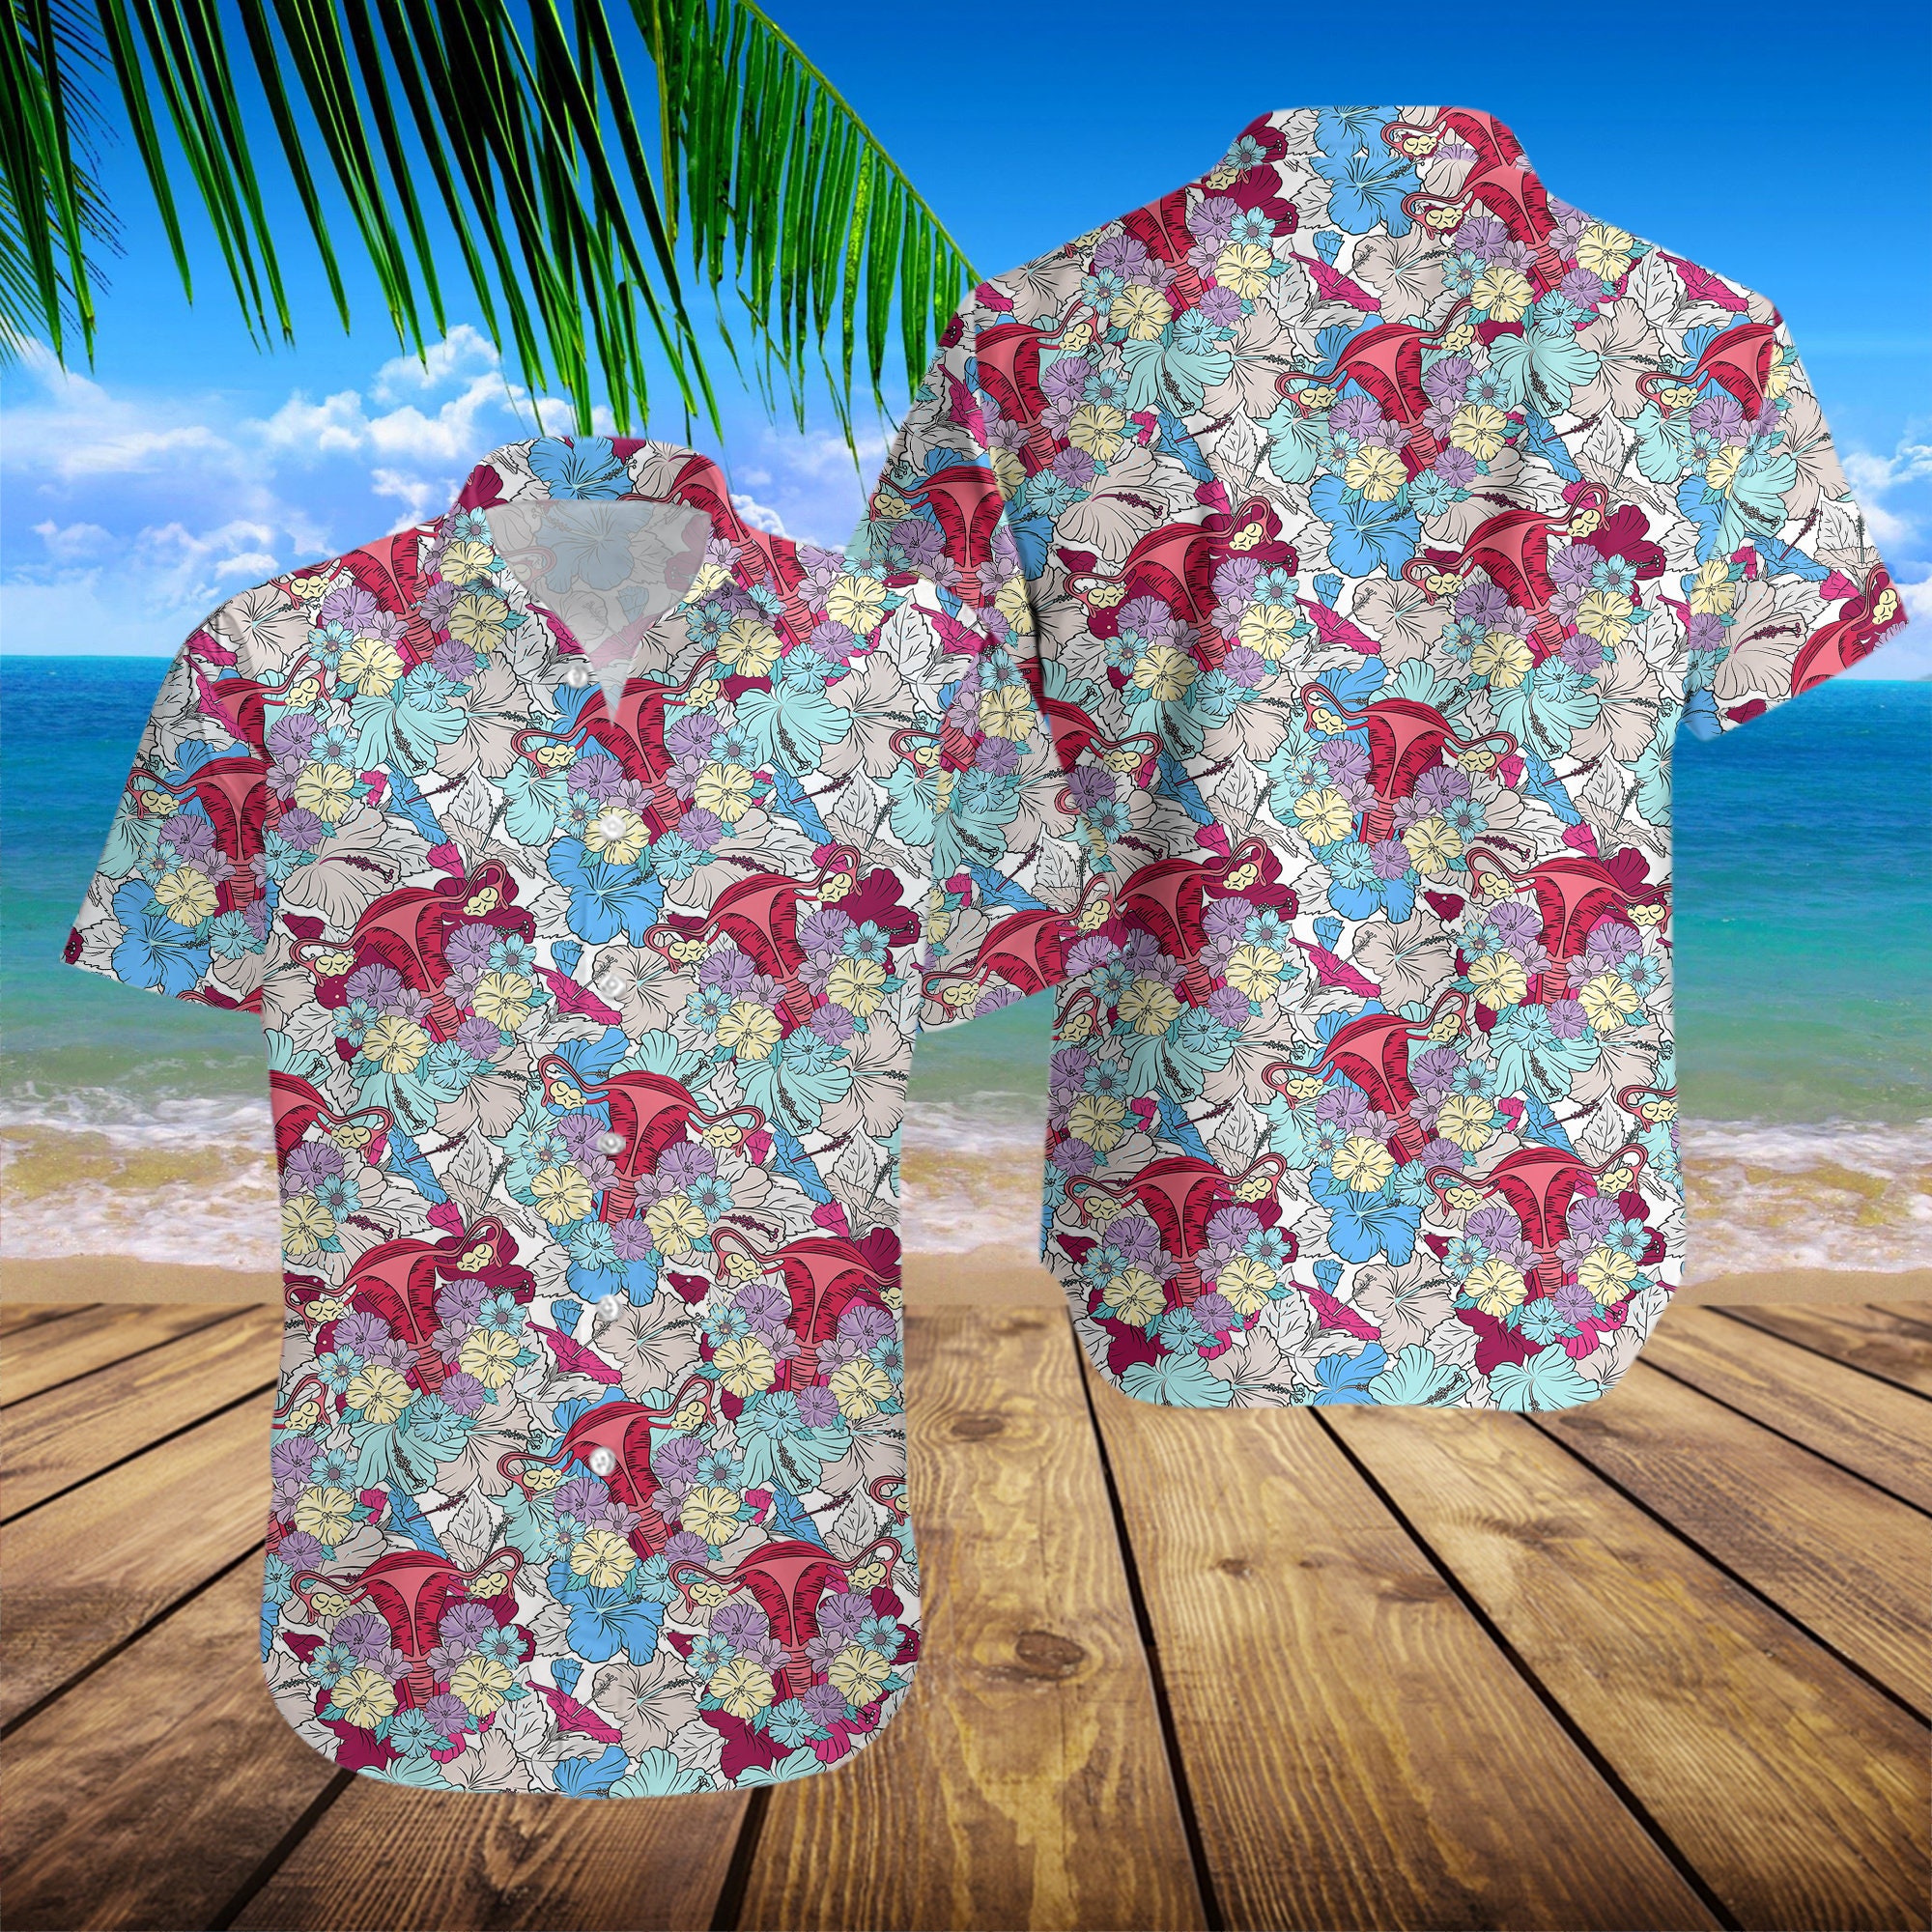 Mind Your Own Uterus Flower Women's Rights Pro Choice Summer Hawaiian Shirt